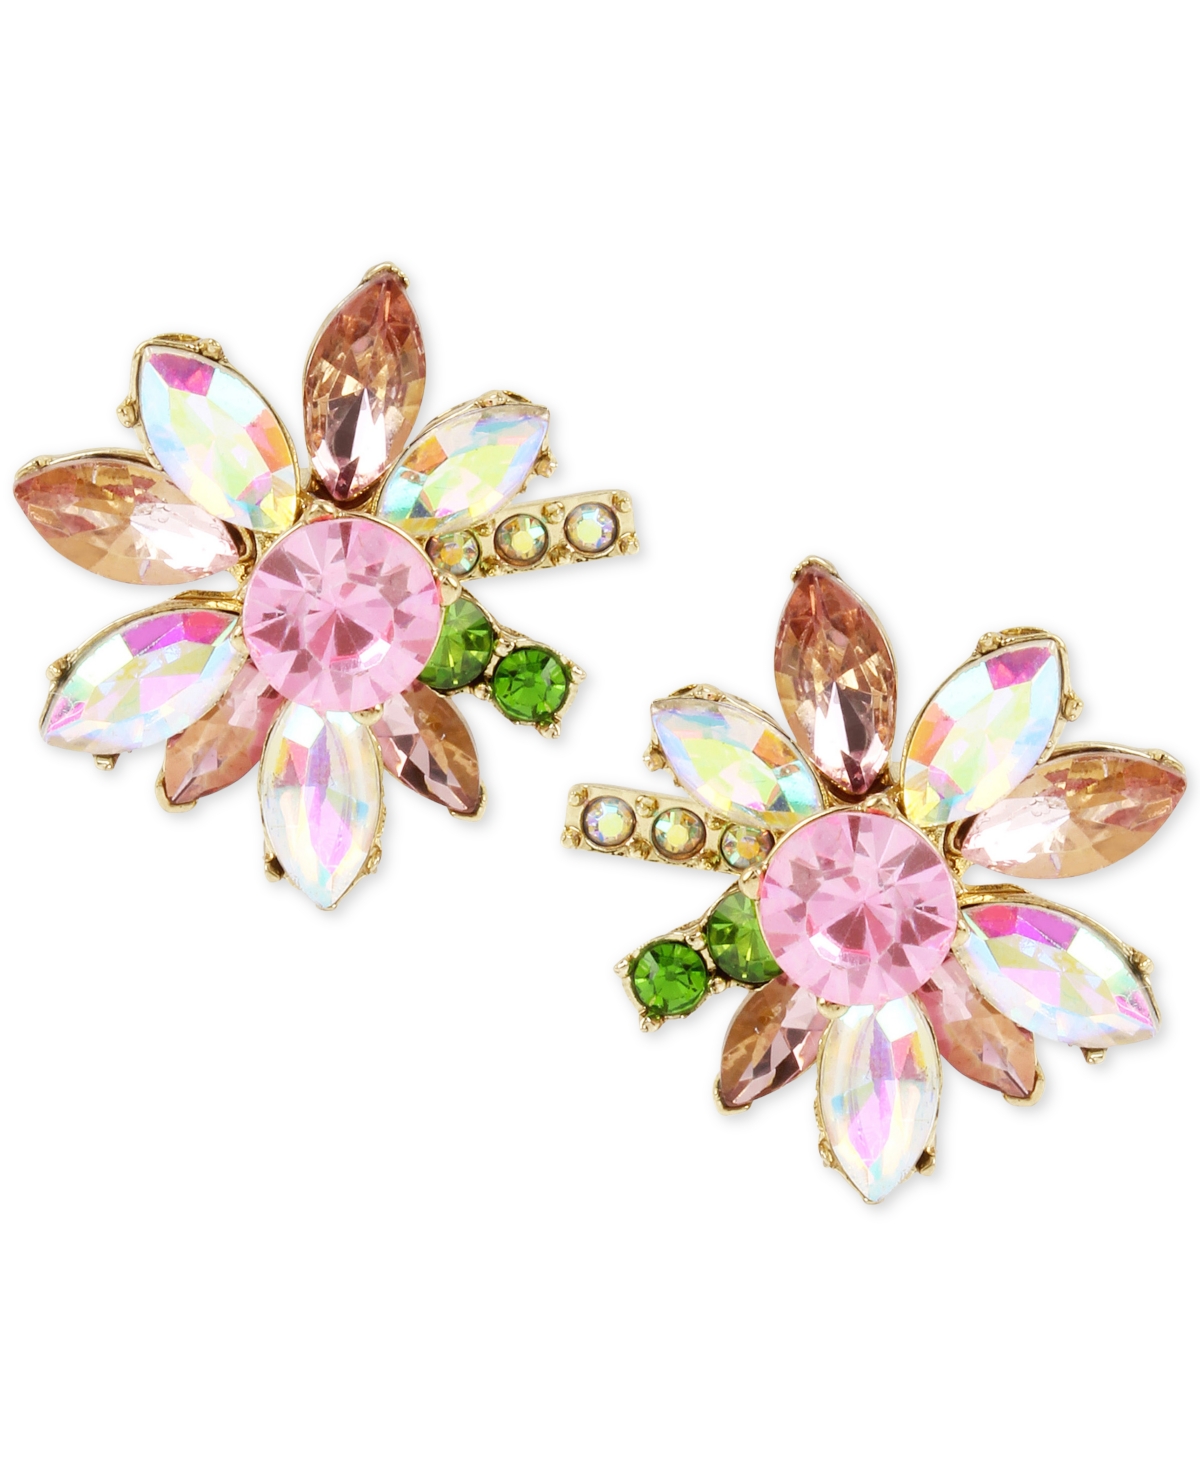 Gold-Tone Multi-Crystal Flower Stud Earrings - Multi